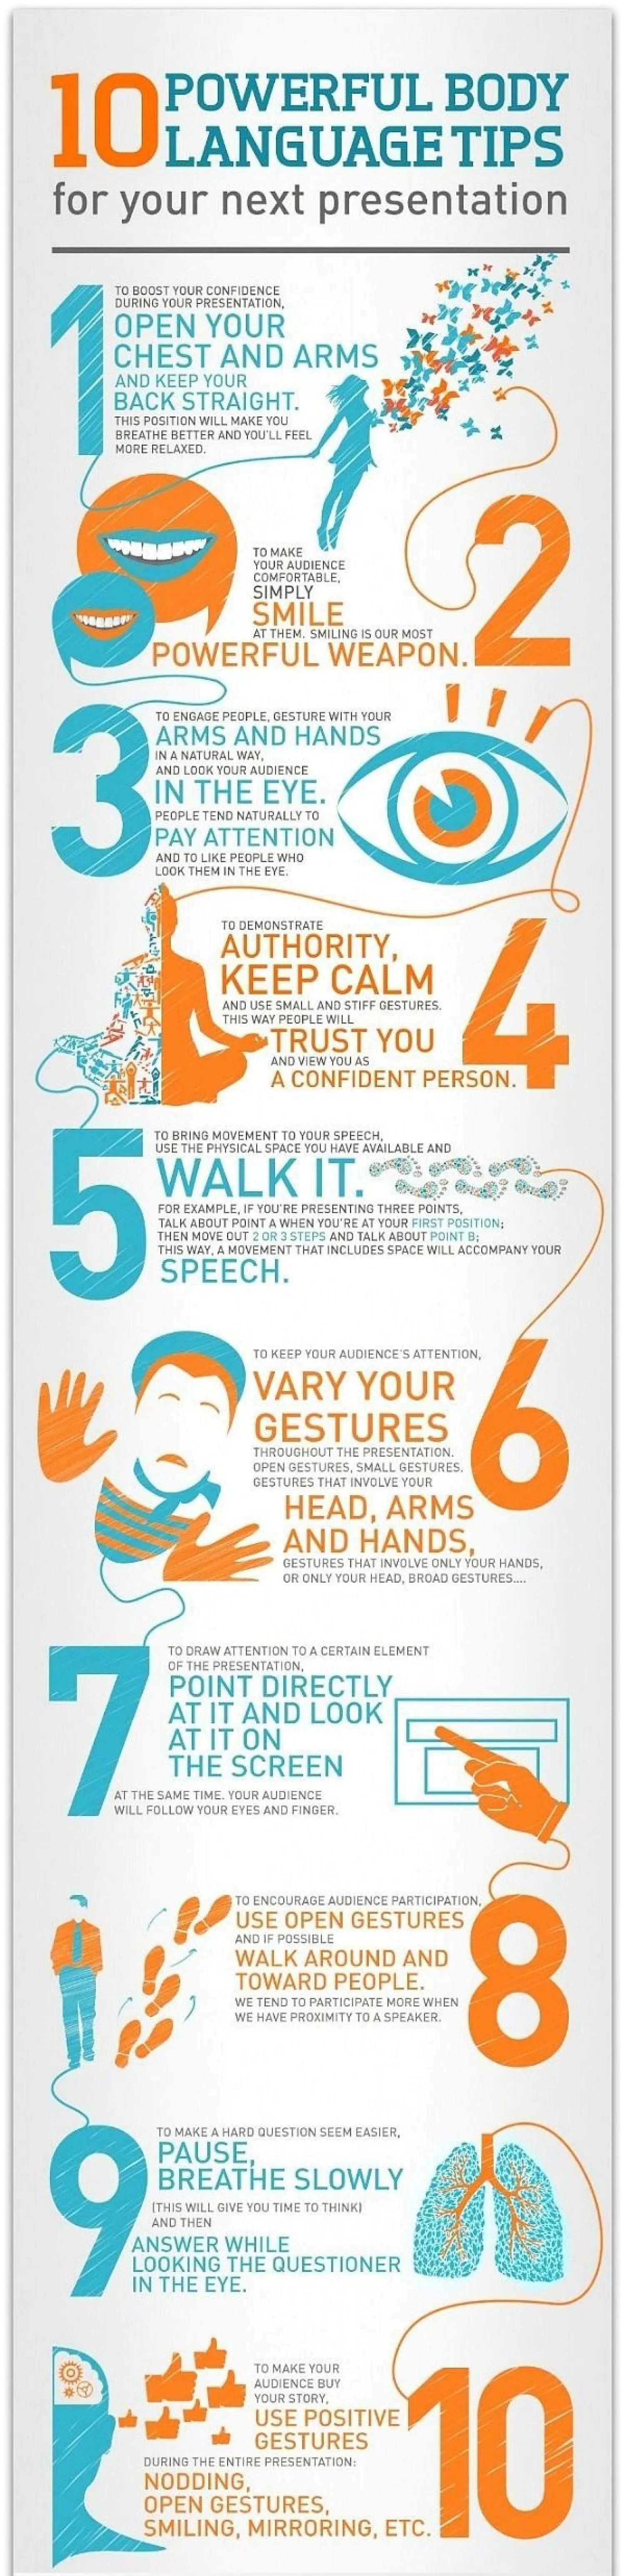 10 Powerful Body Language Tips